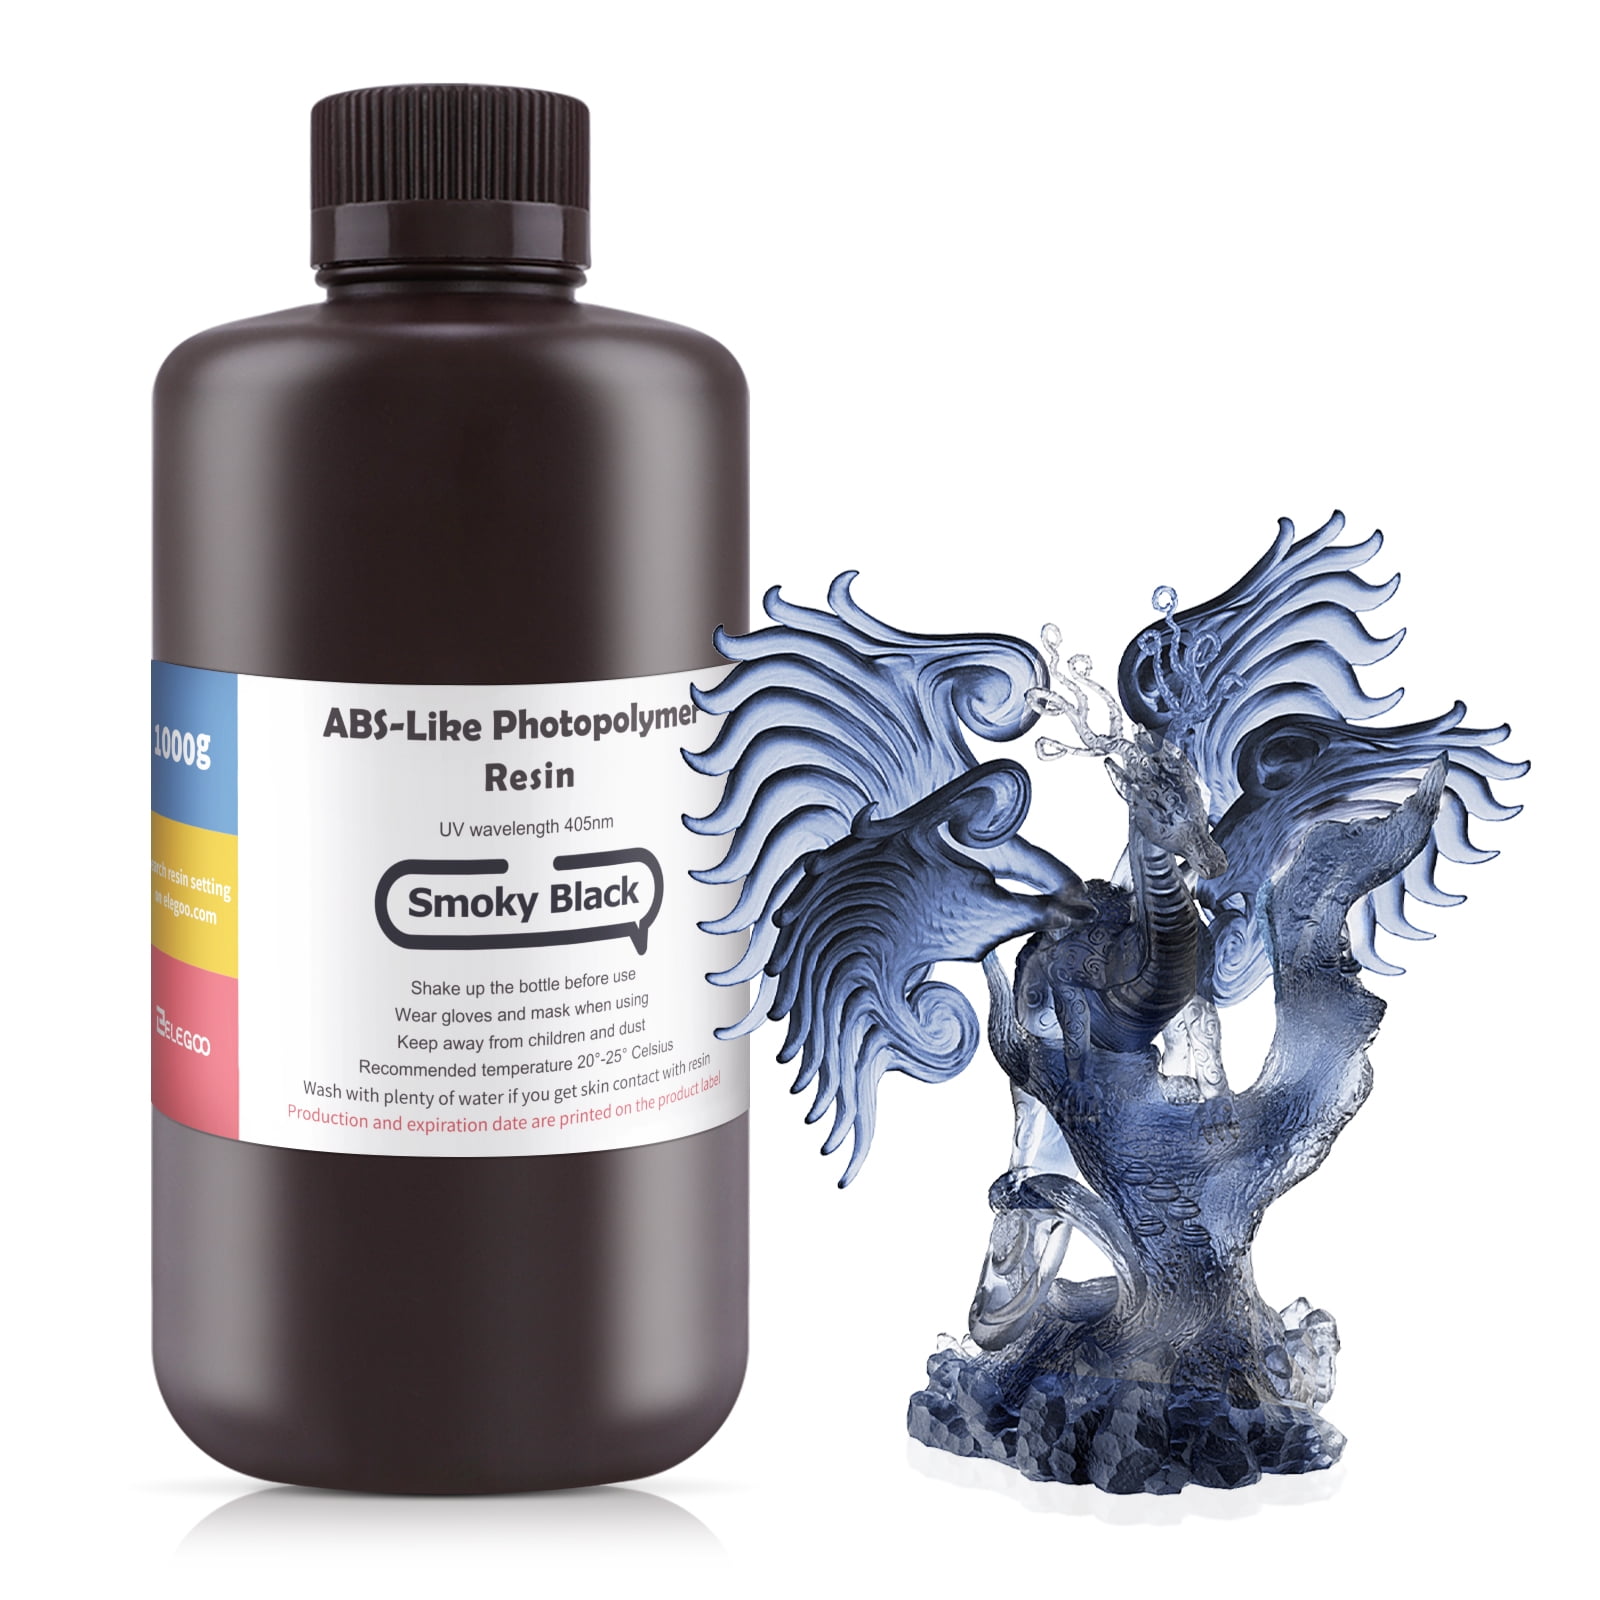 Liquid ELEGOO ABS-Like Photopolymer Resin - Smoky Black, For